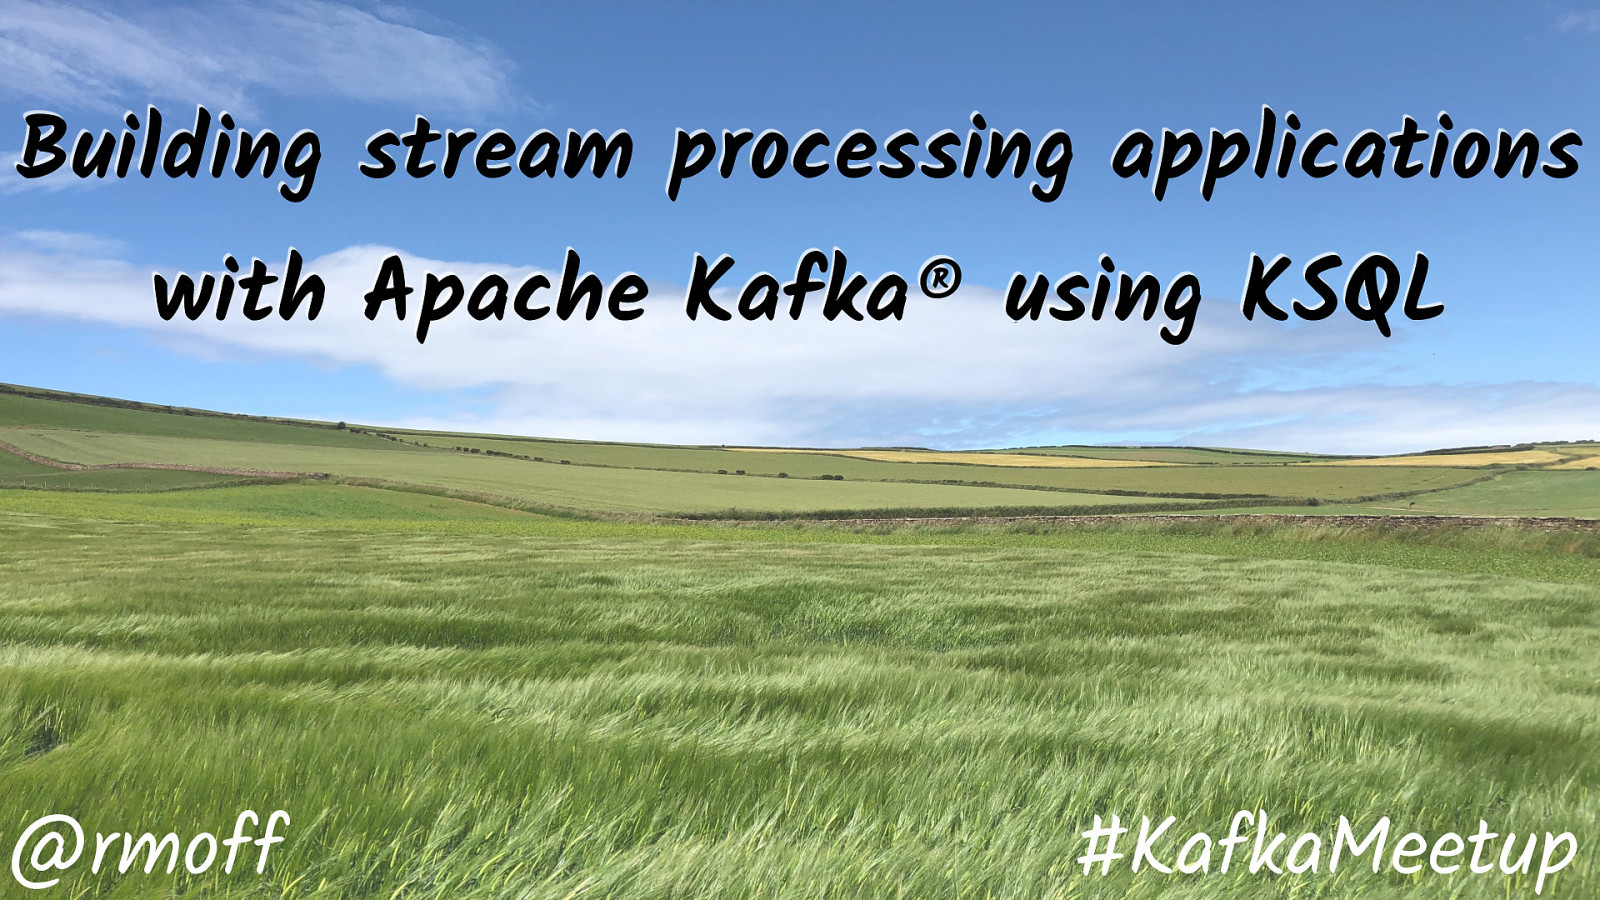 Building stream processing applications for Apache Kafka using KSQL